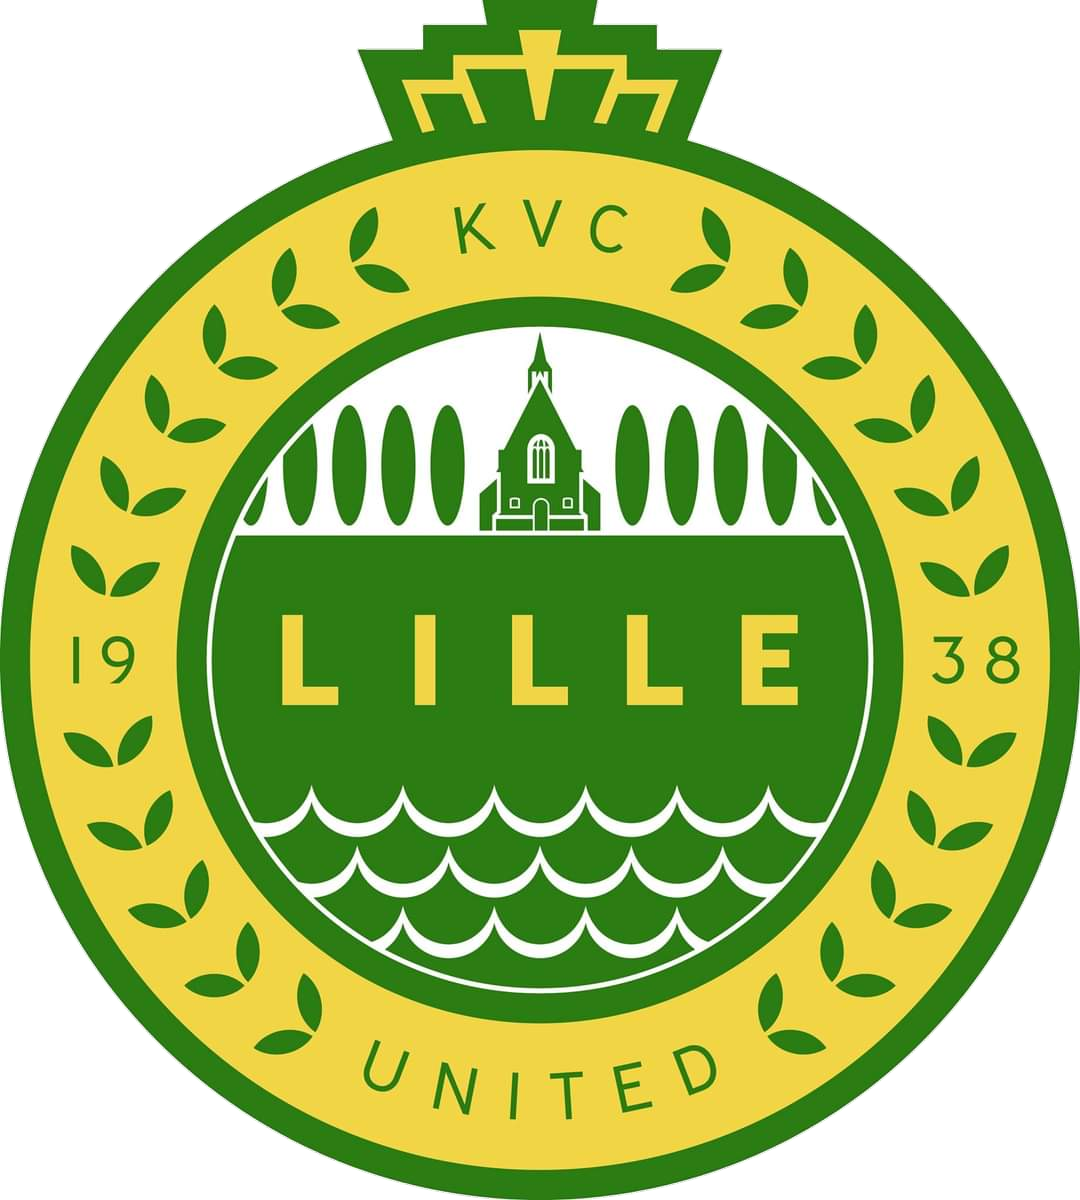 Wappen ehemals KVC Lille United  114684